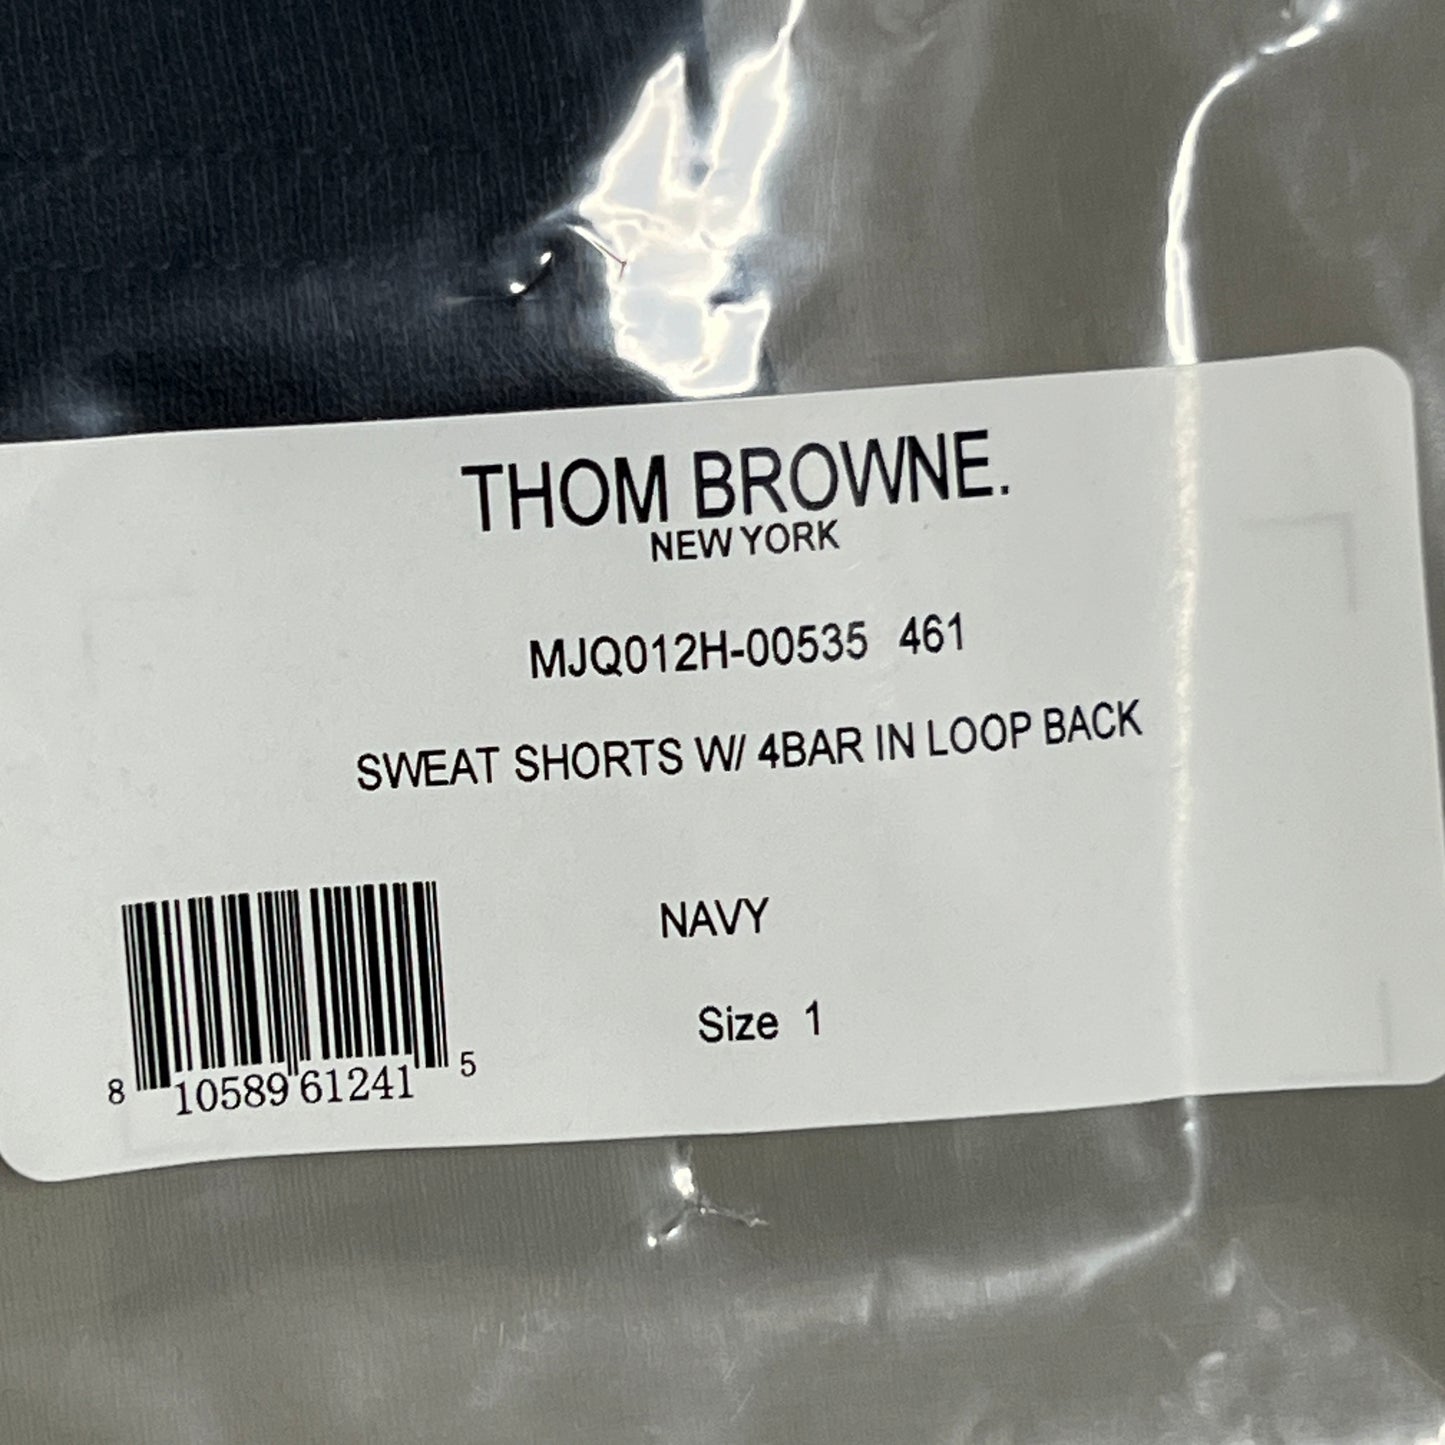 THOM BROWNE Classic Sweat Shorts w/4 Bar Loop Back Navy Size 1 (New)